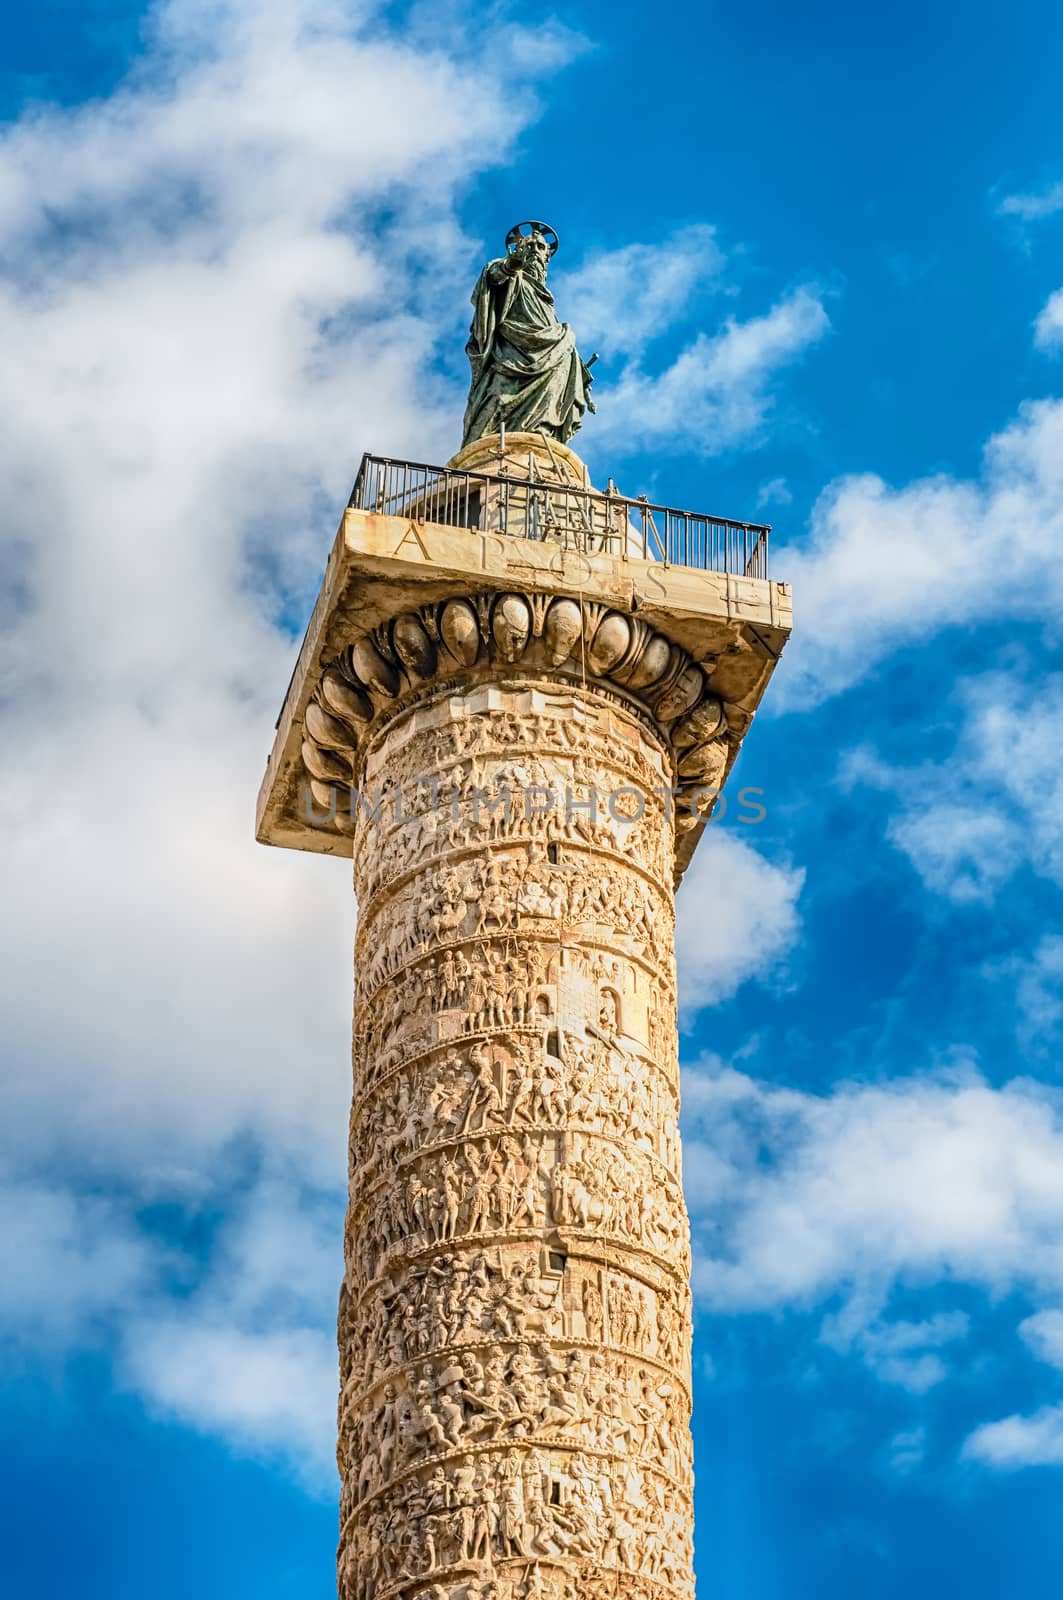 The Column of Marcus Aurelius in Piazza Colonna, Rome, Italy by marcorubino